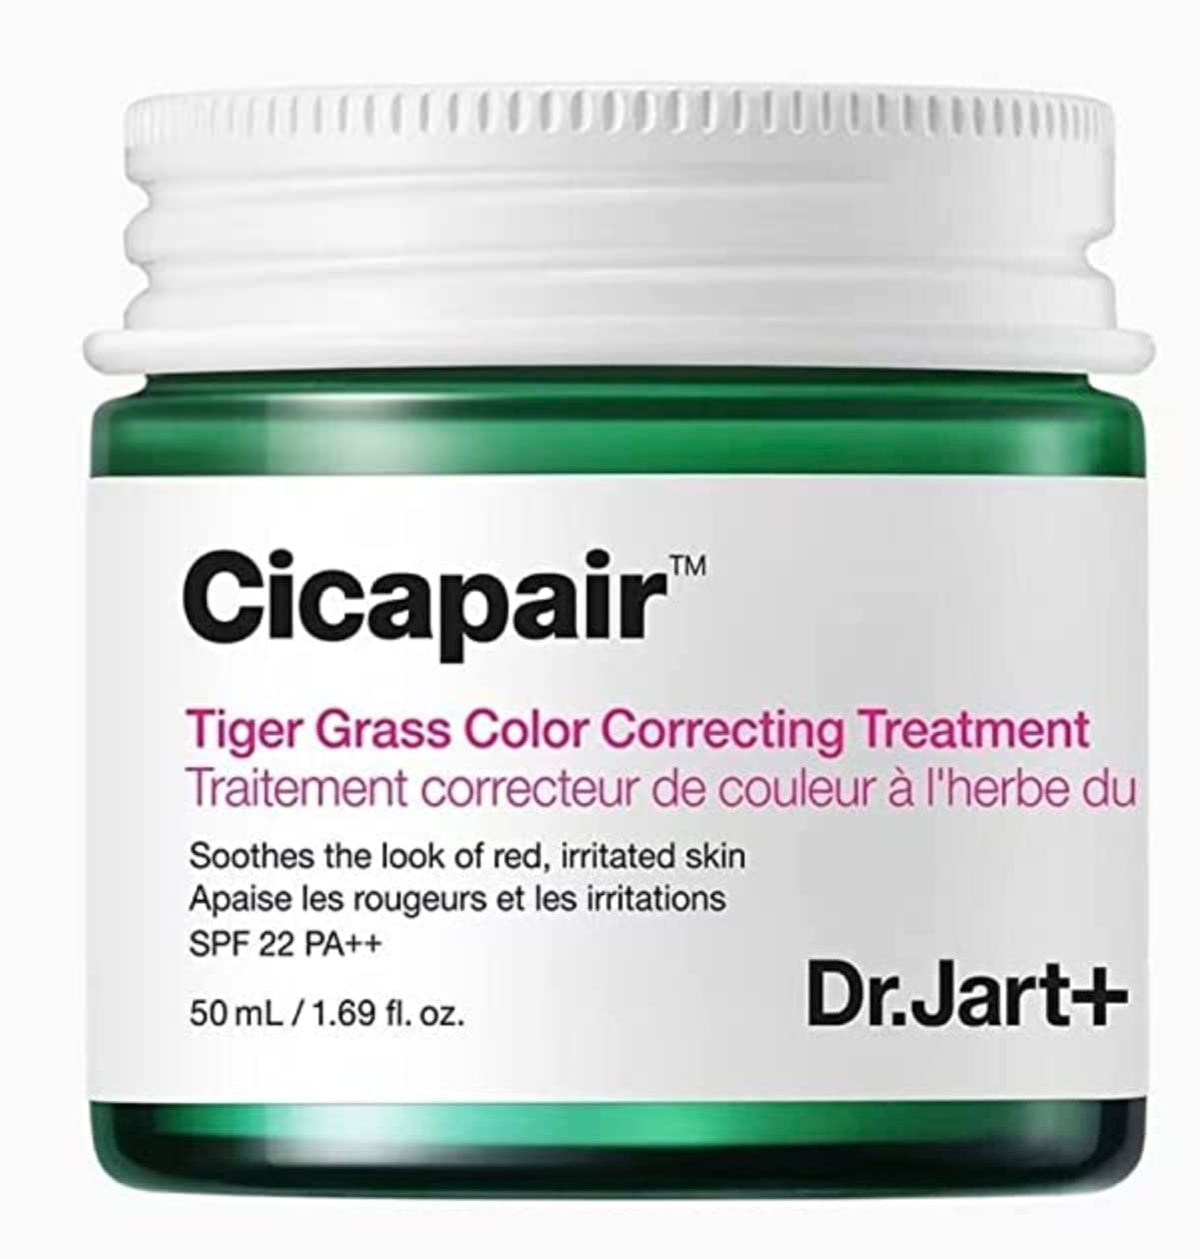 Dr.Jart+ Cicapair Tiger Grass Color Correcting Treatment 50ml / 1.69 fl.oz - KosBeauty